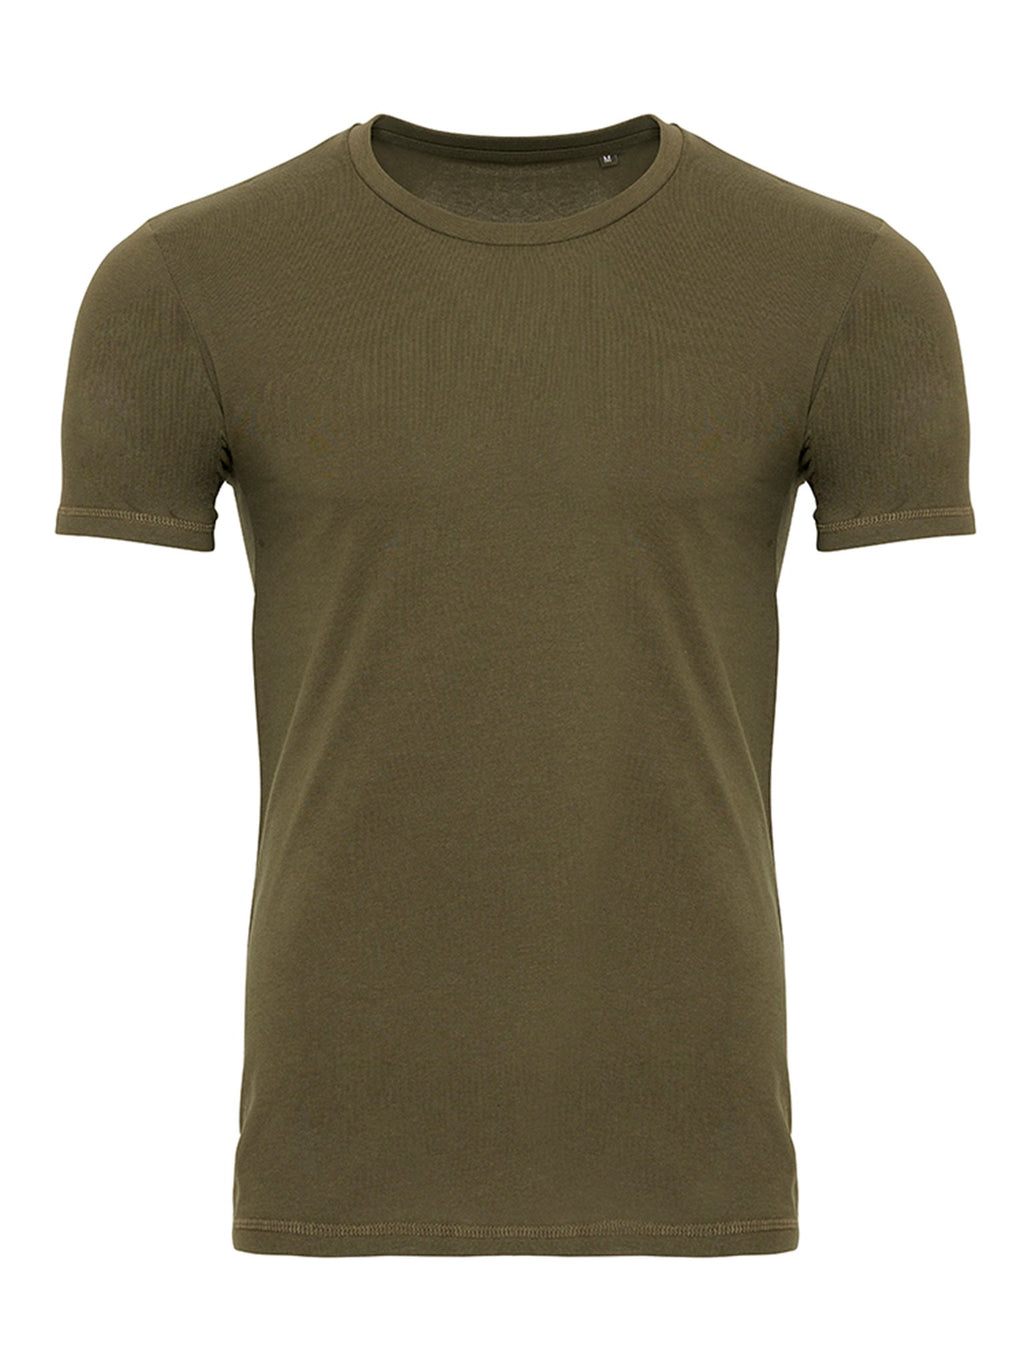 Muscle T -Shirt - Armeegrün